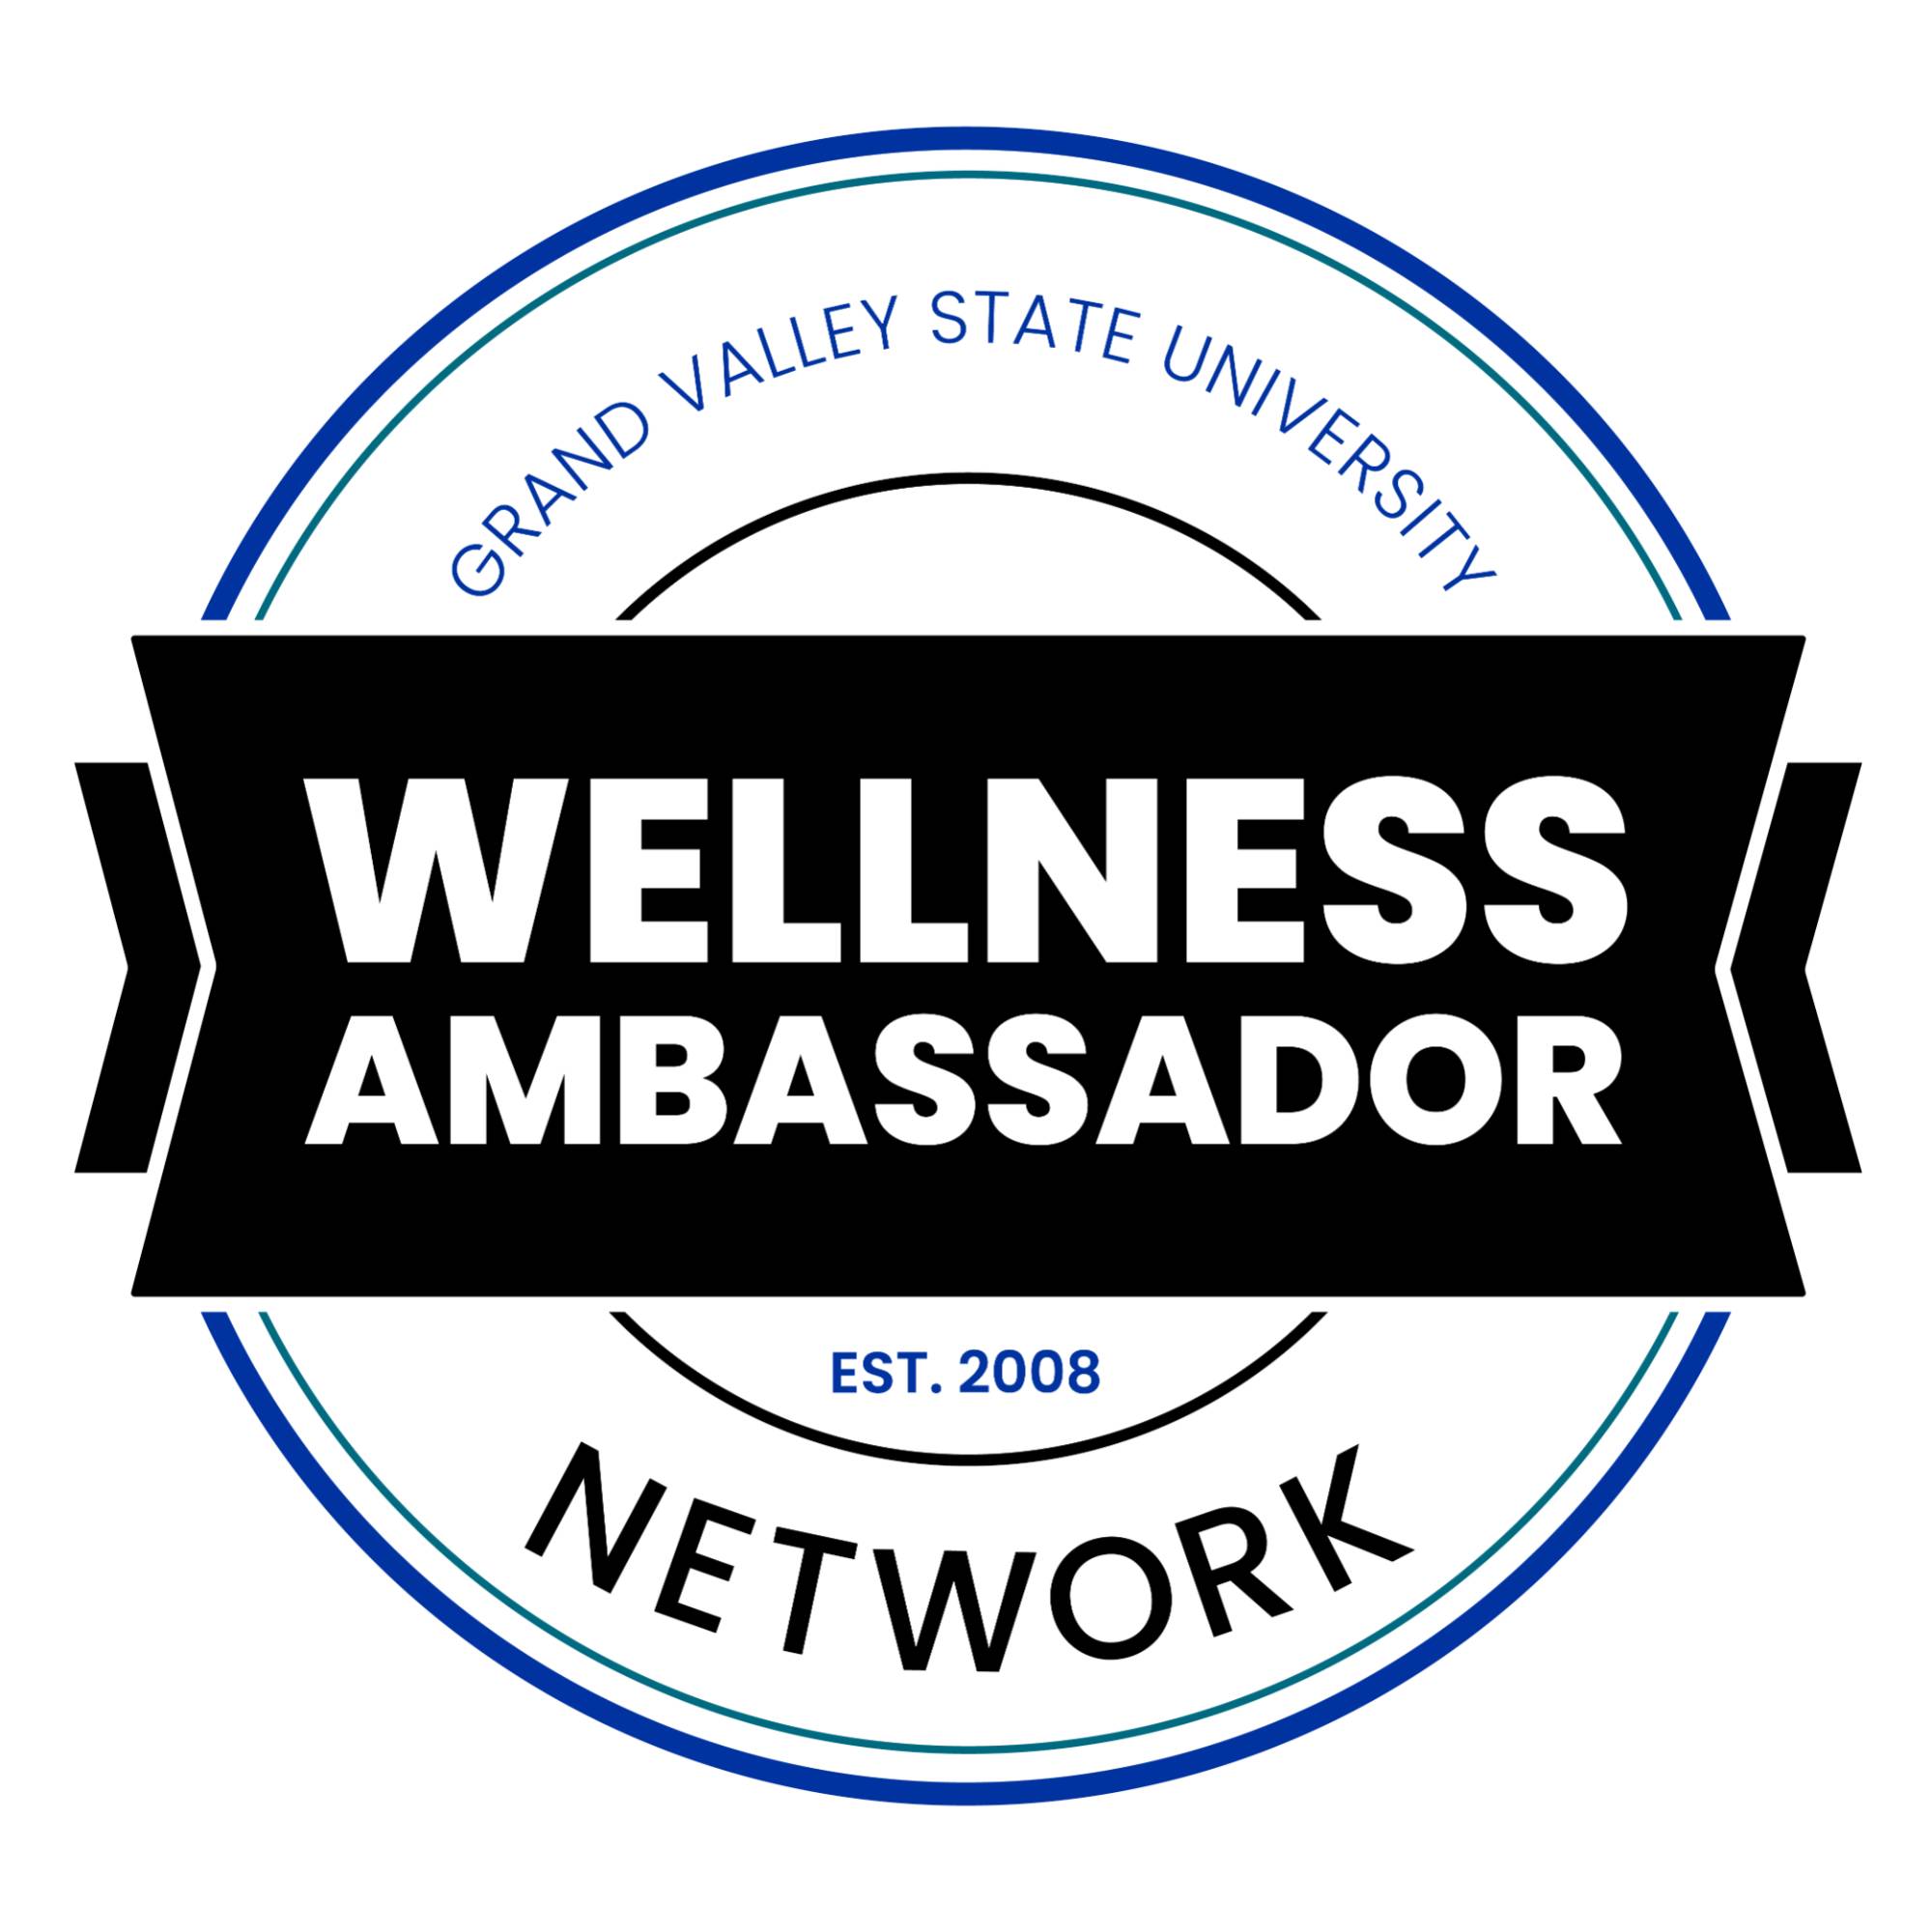 Wellness Ambassador emblem